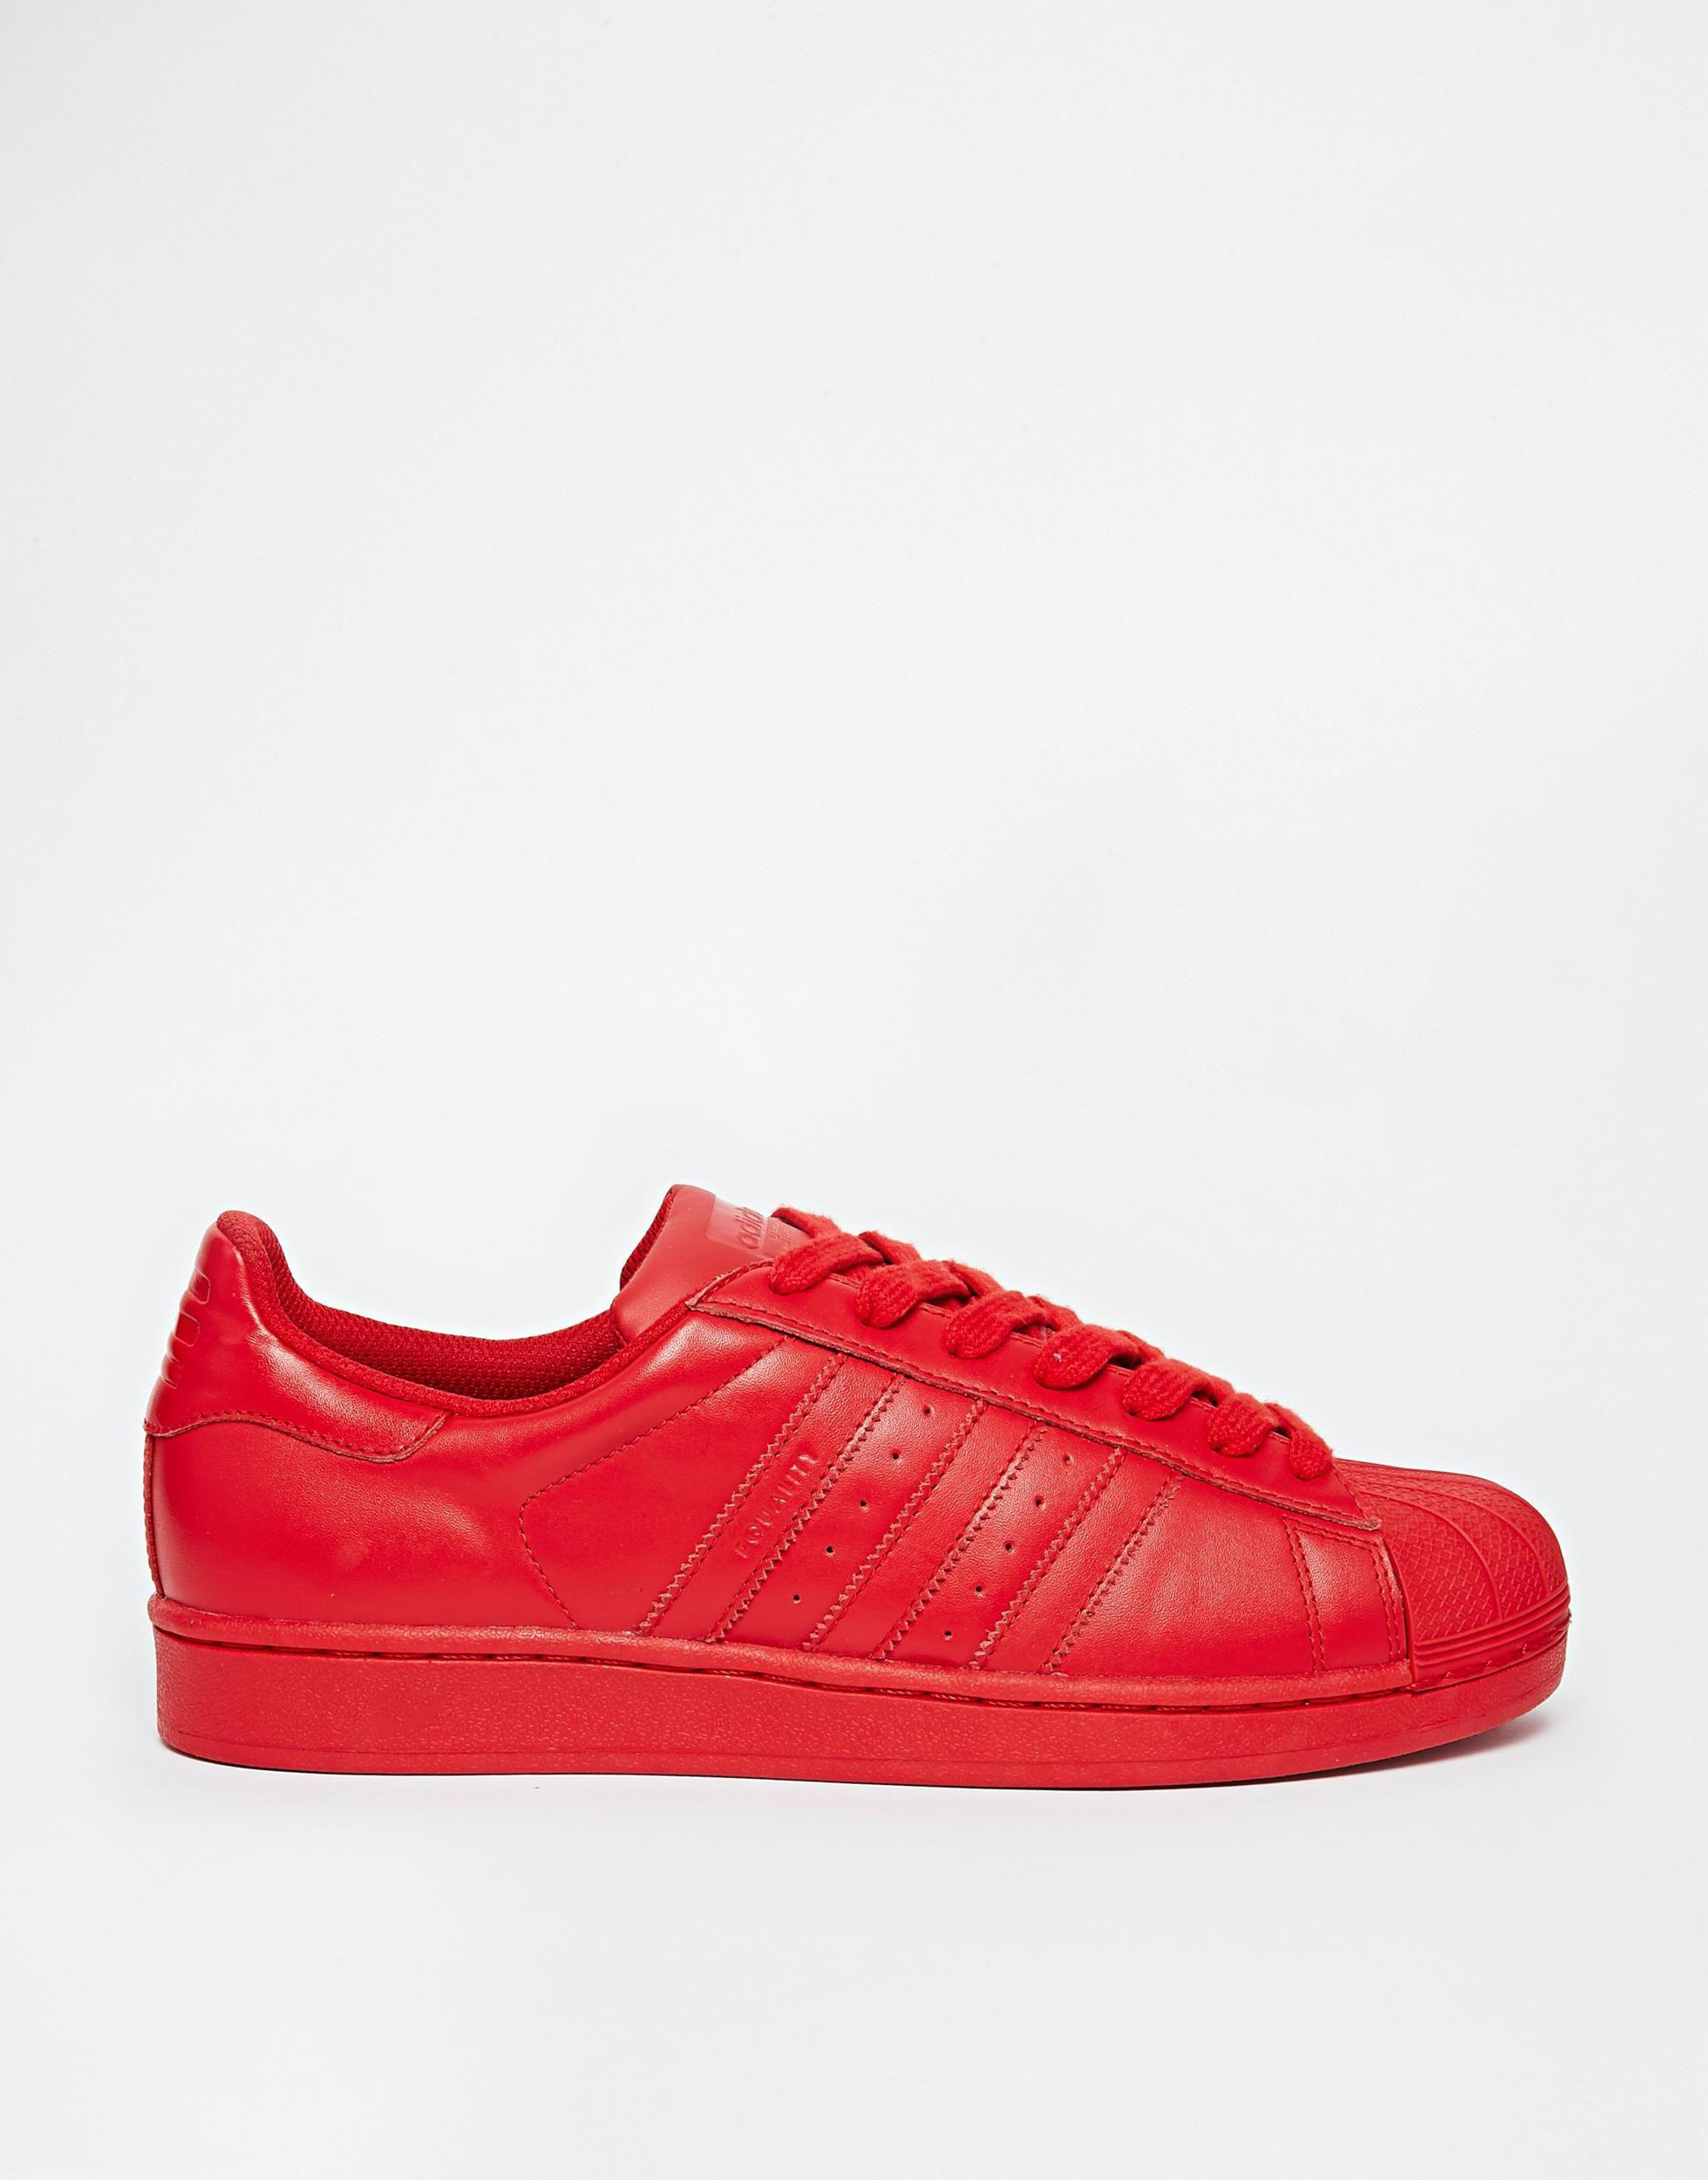 adidas Originals X Pharrell Supercolour Superstar S41833 in Red for Men Lyst